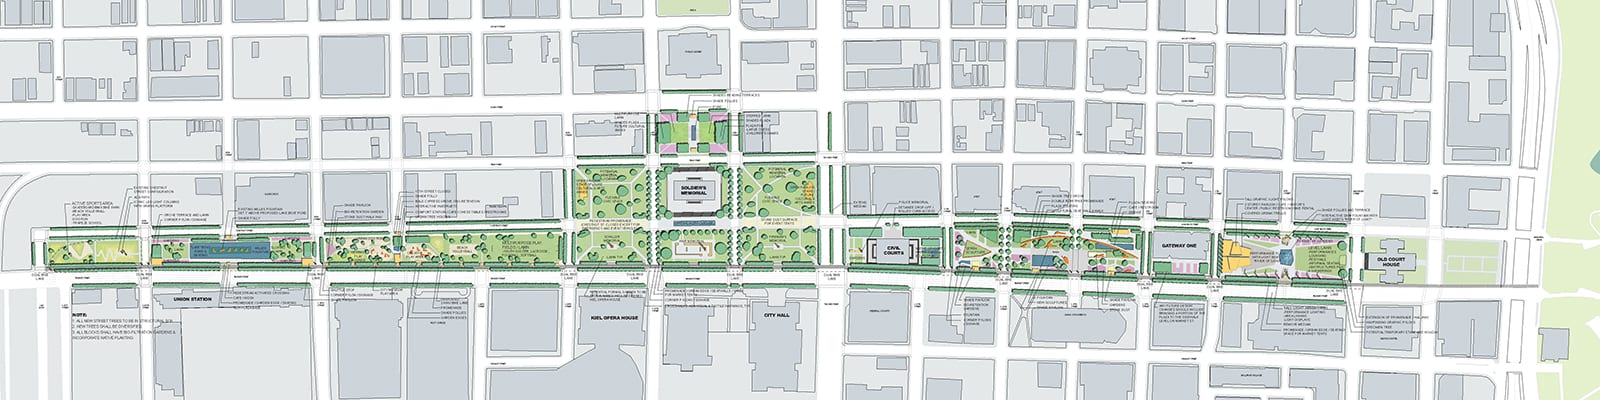 Conceptual plan of St Louis Gateway Mall Park Plan within a larger neighbourhood.